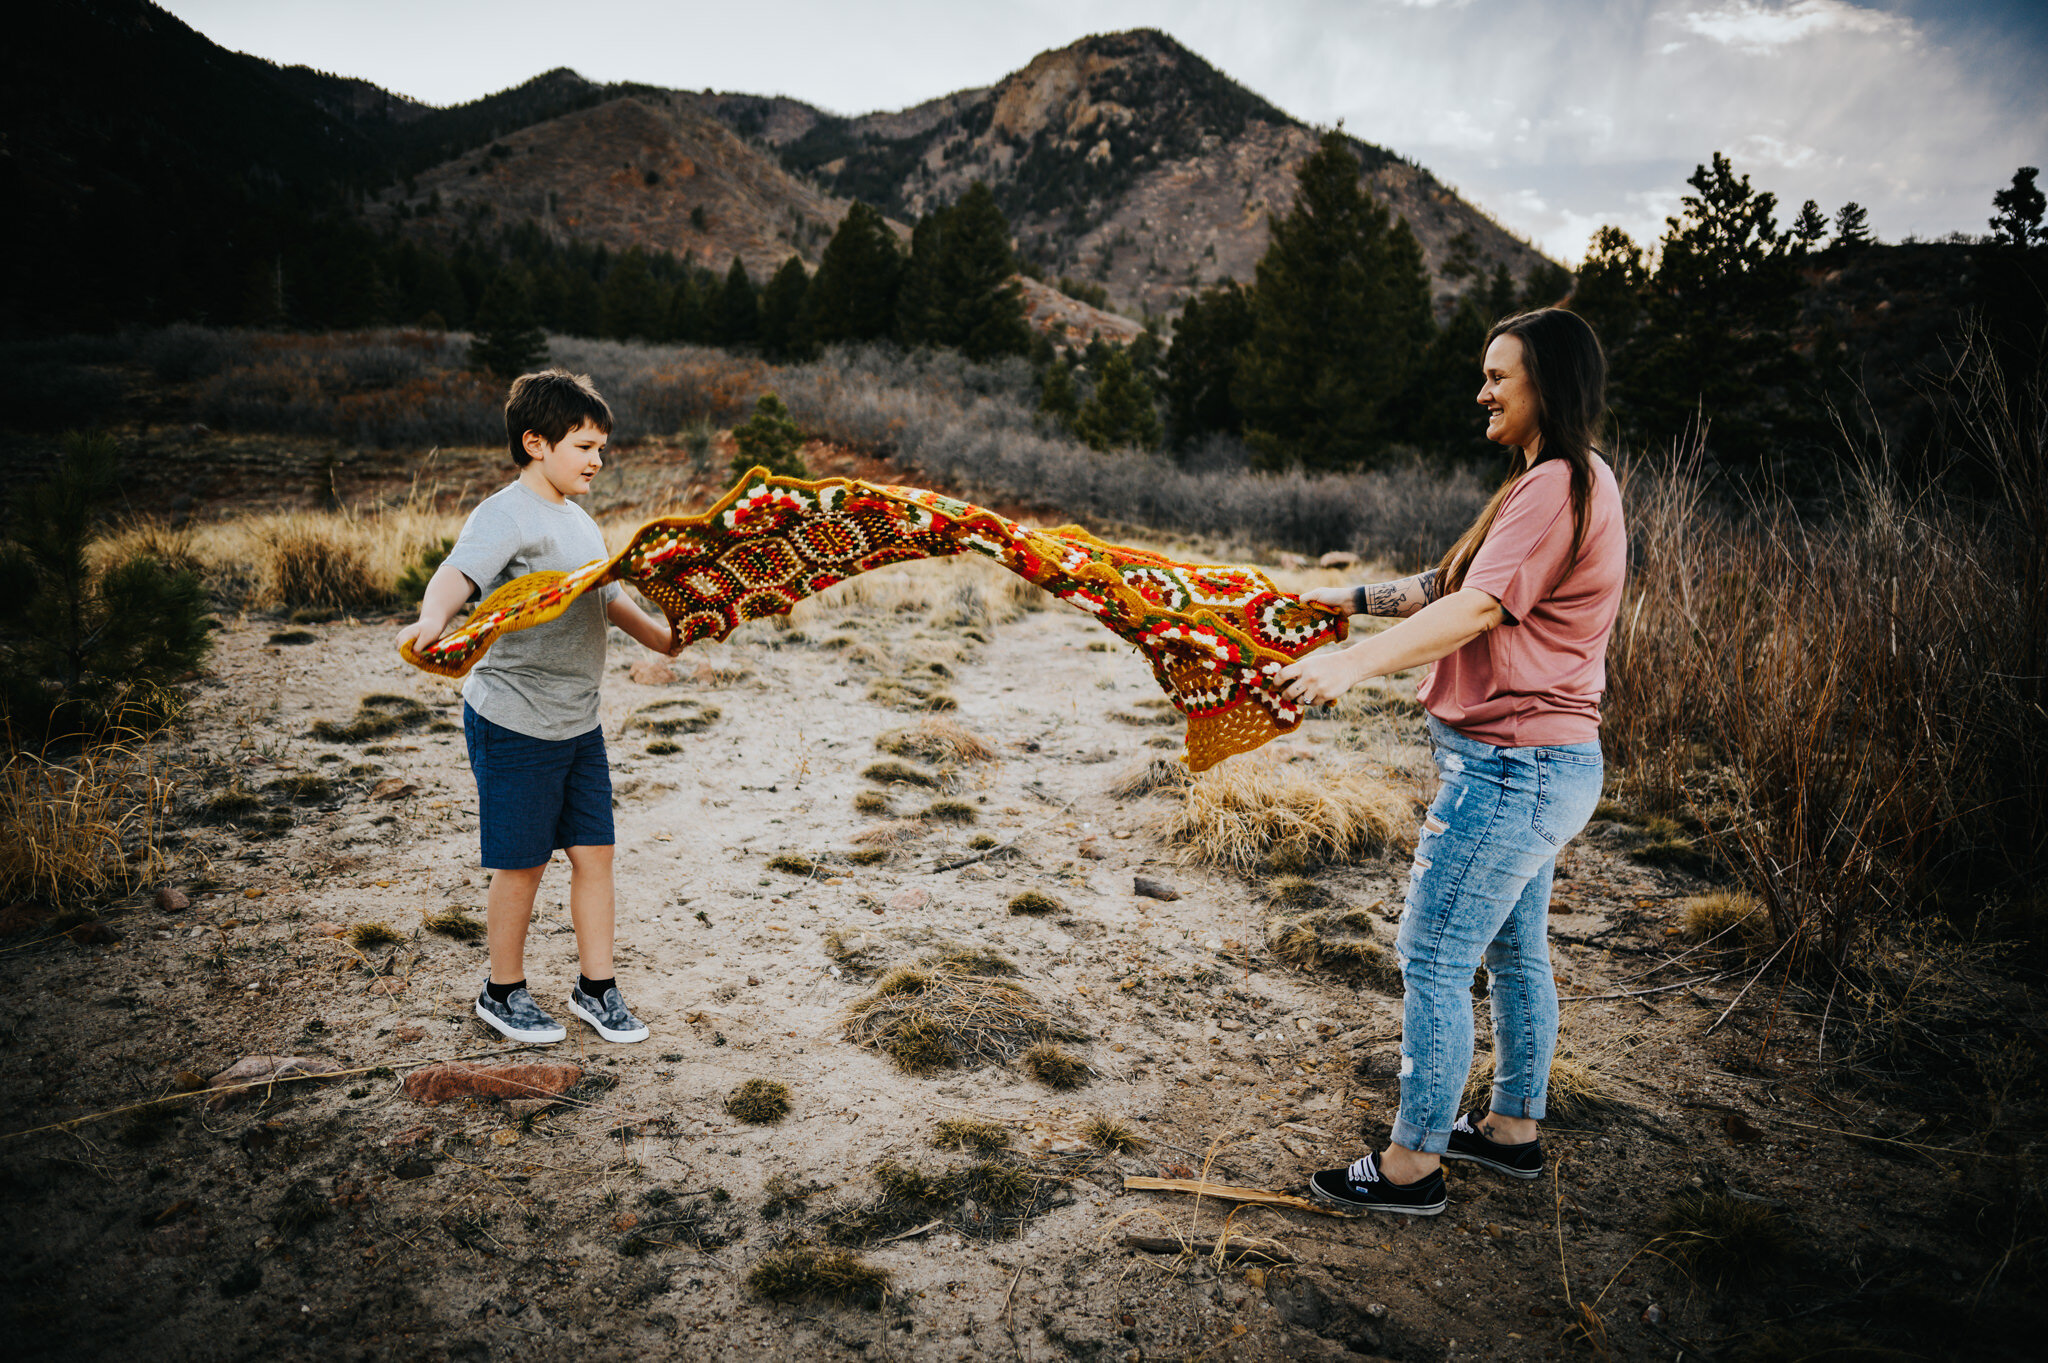 Danielle McVey Family Session Colorado Springs Photographer Sunset Mountains Wild Prairie Photography-18-2020.jpg